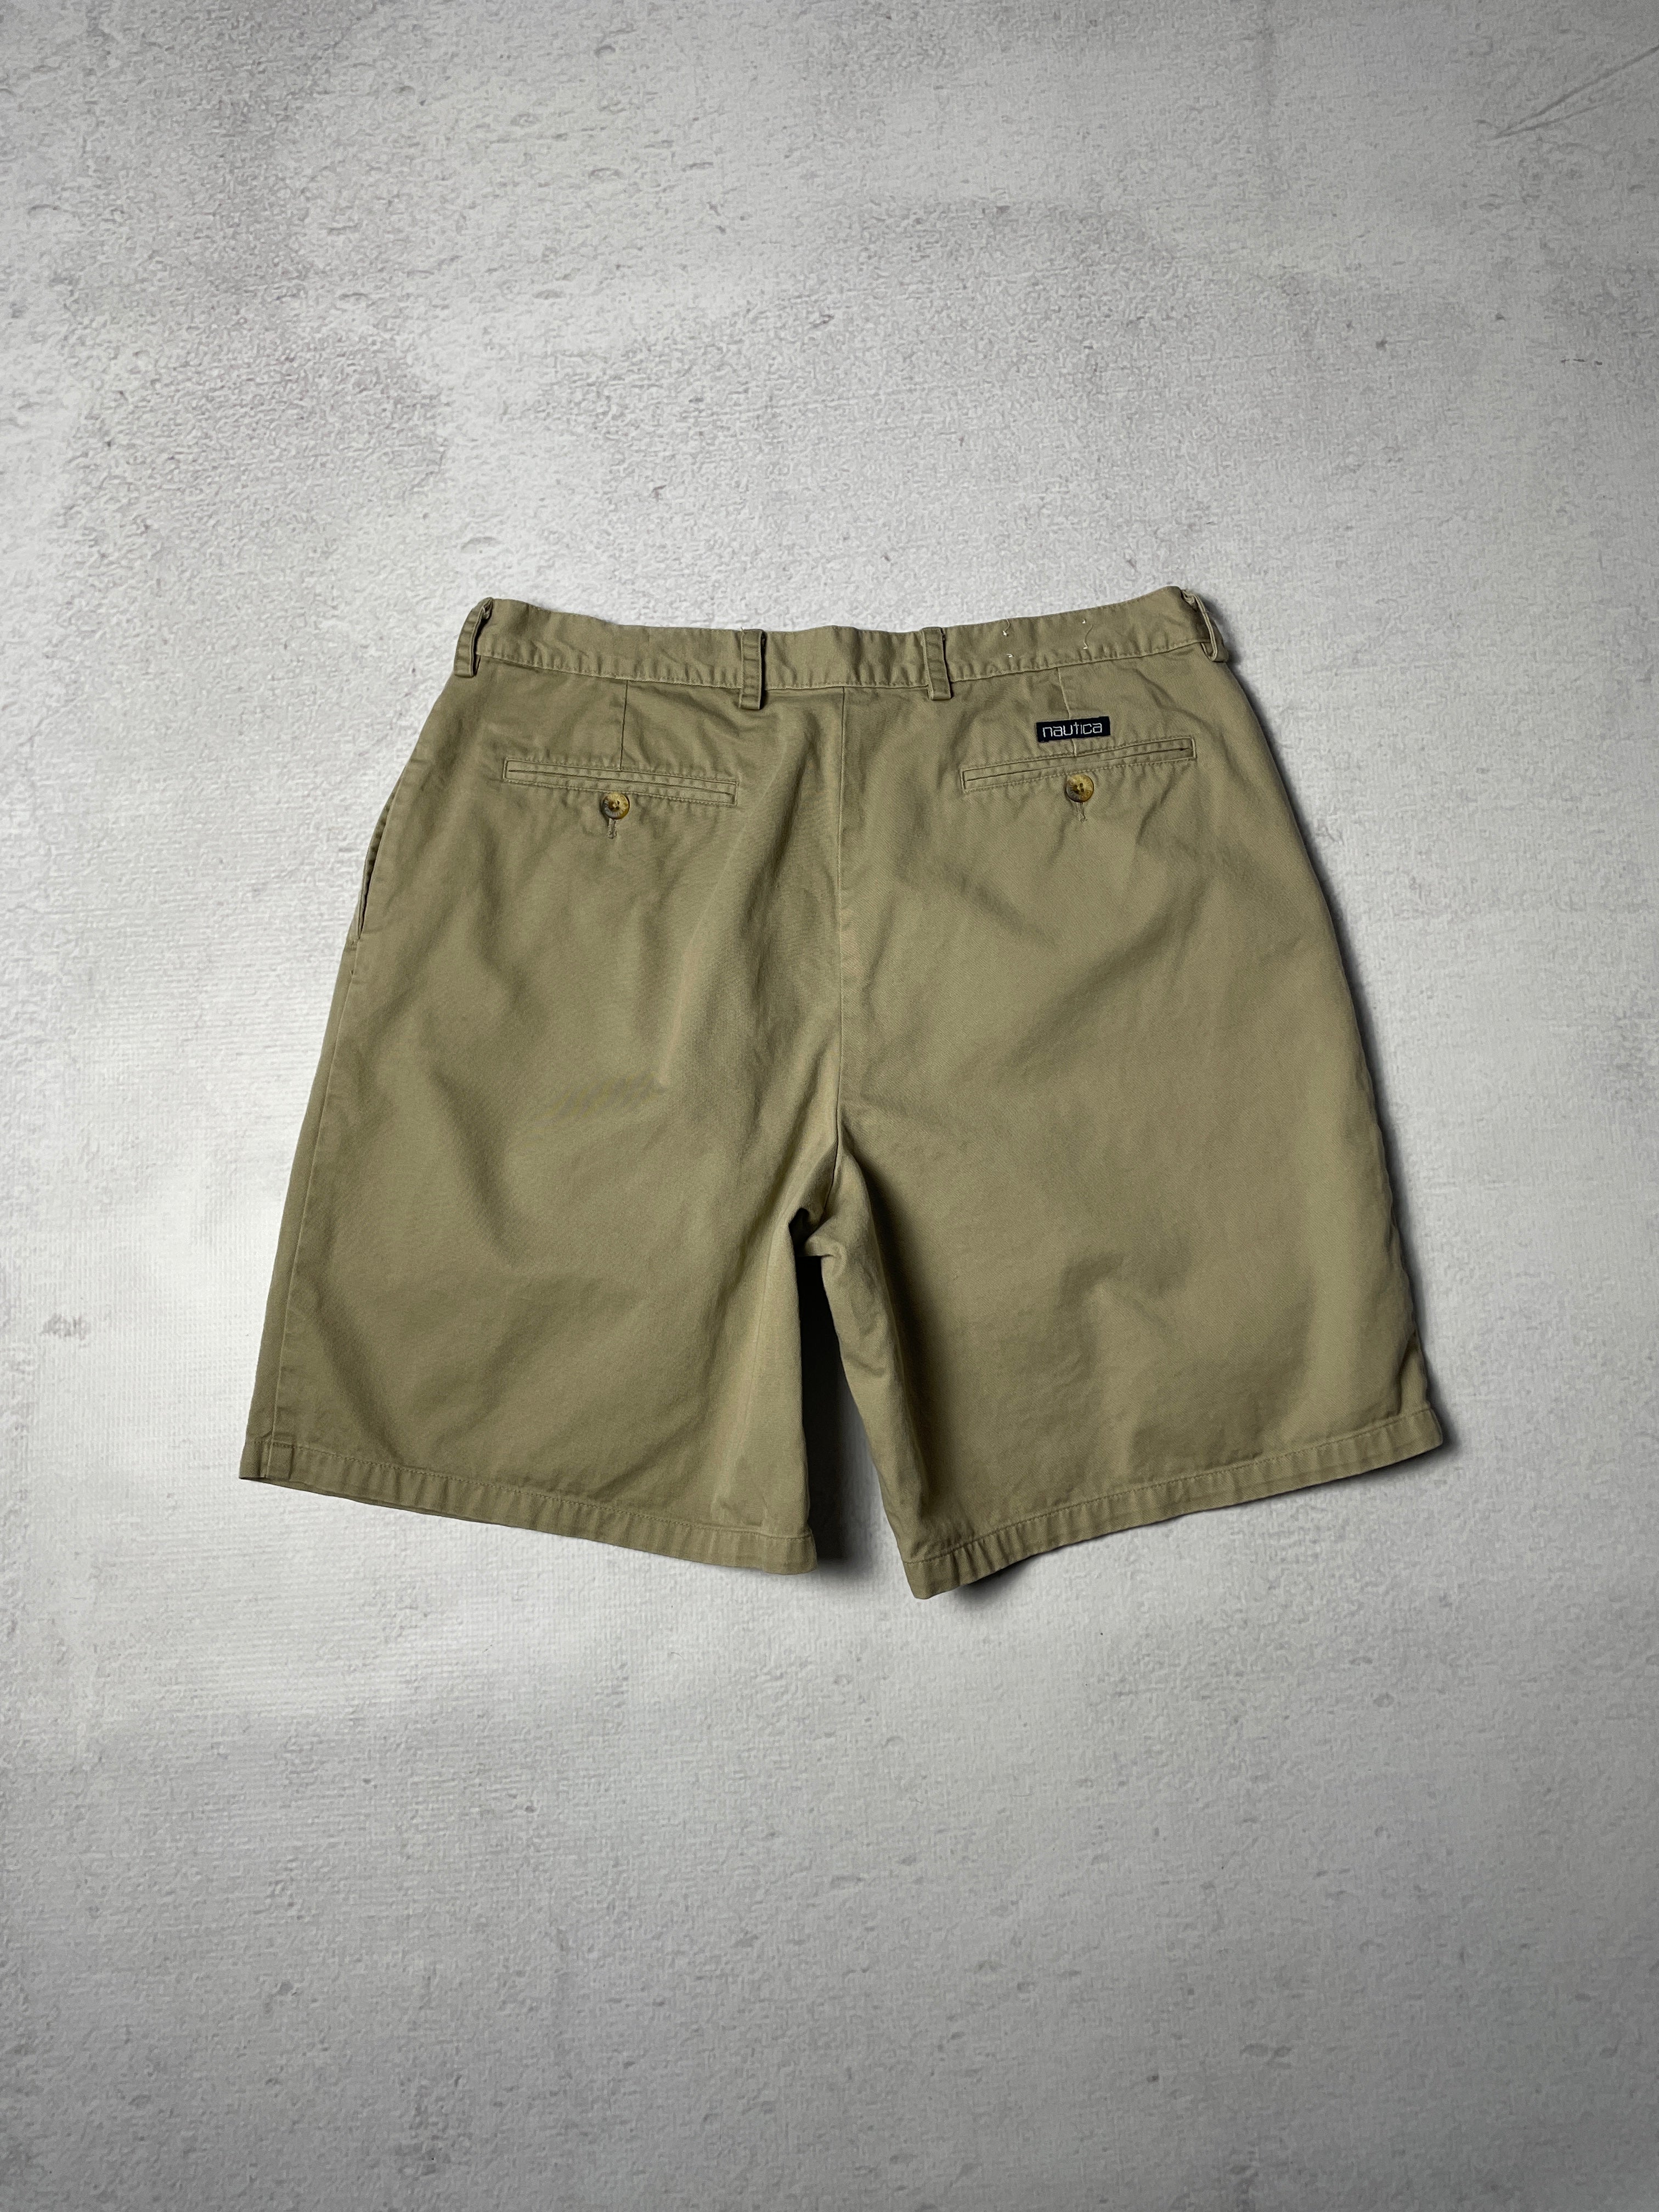 Vintage Nautica Chino Shorts - Men's 36W